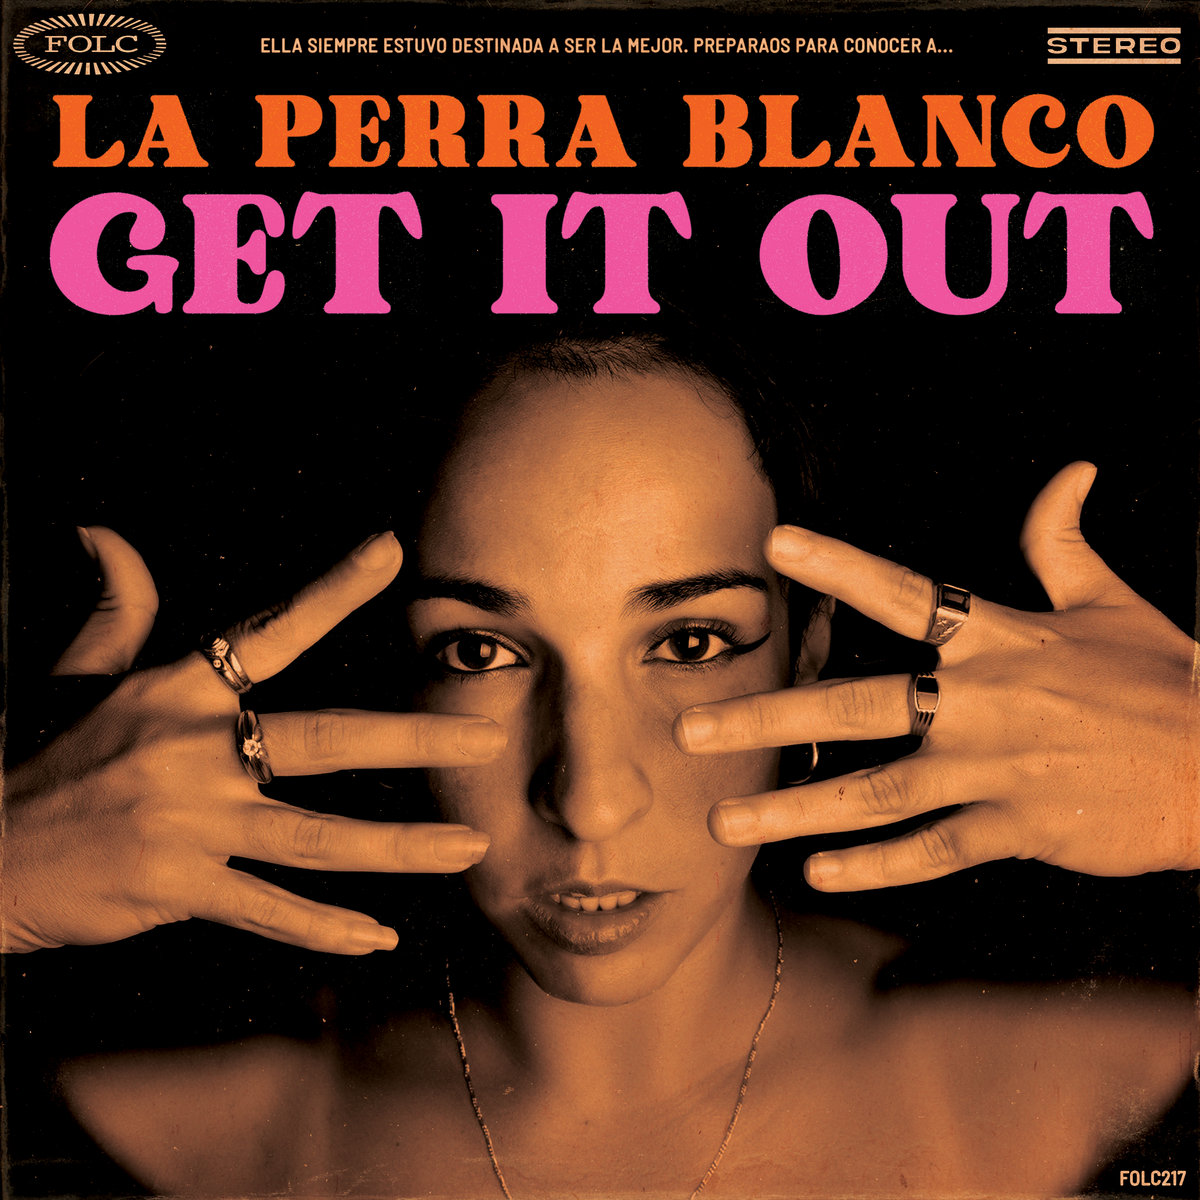 FOLC217 LA PERRA BLANCO "Get It Out" | FOLC RECORDS